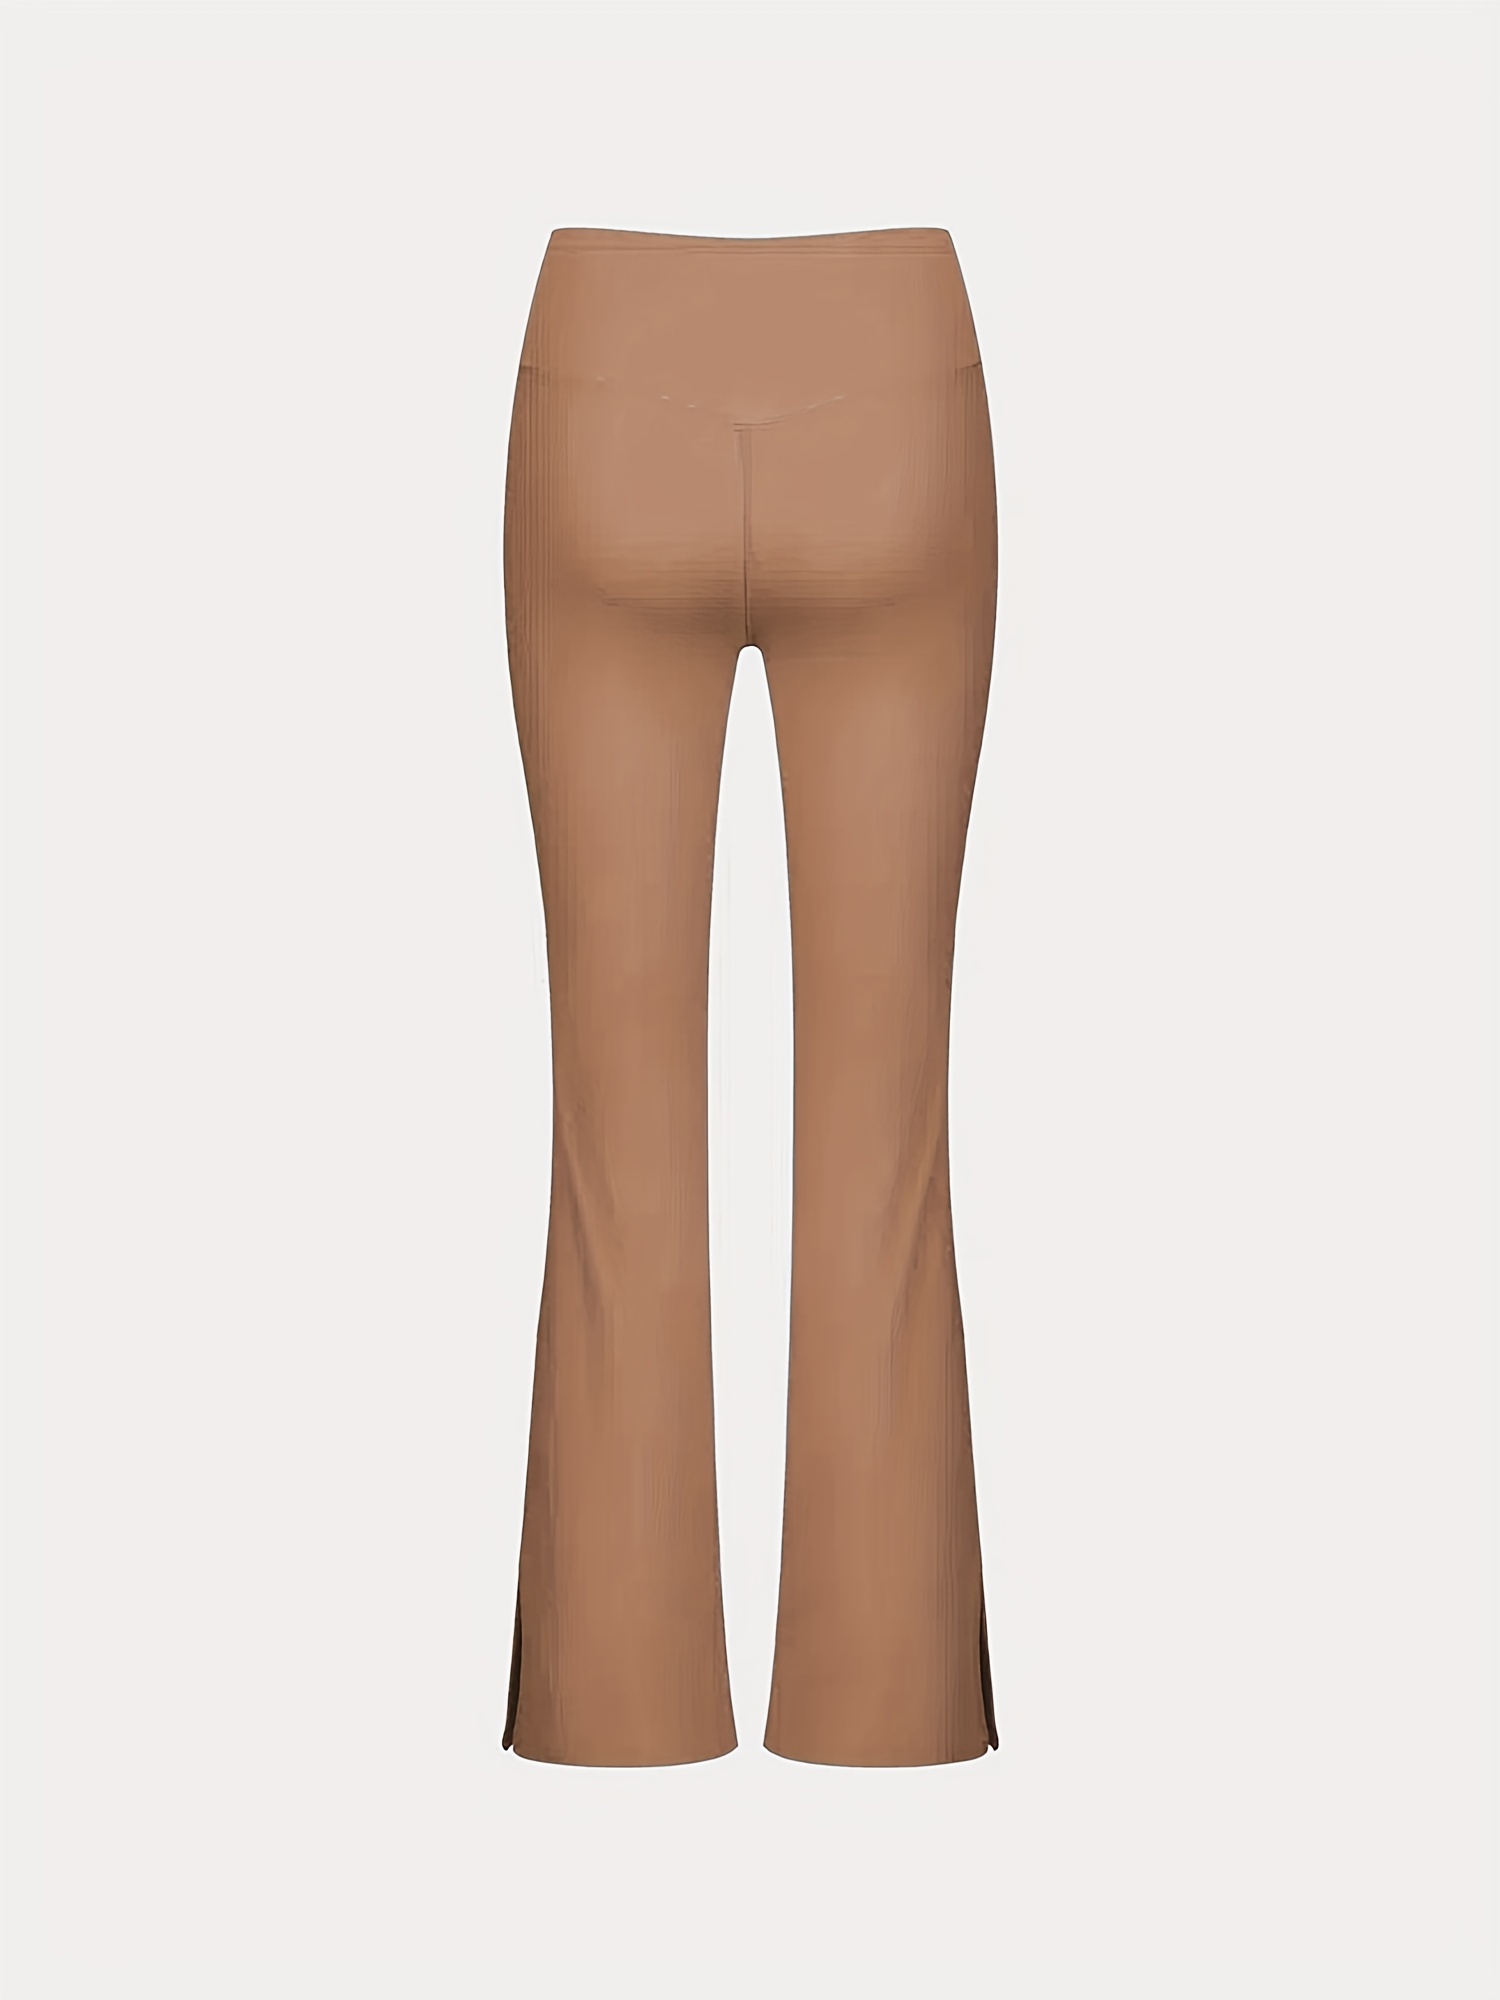 CAICJ98 Pants for Women Women's High Waist Slit Hem Pants Plain Flare Leg Yoga  Pants Brown,L 